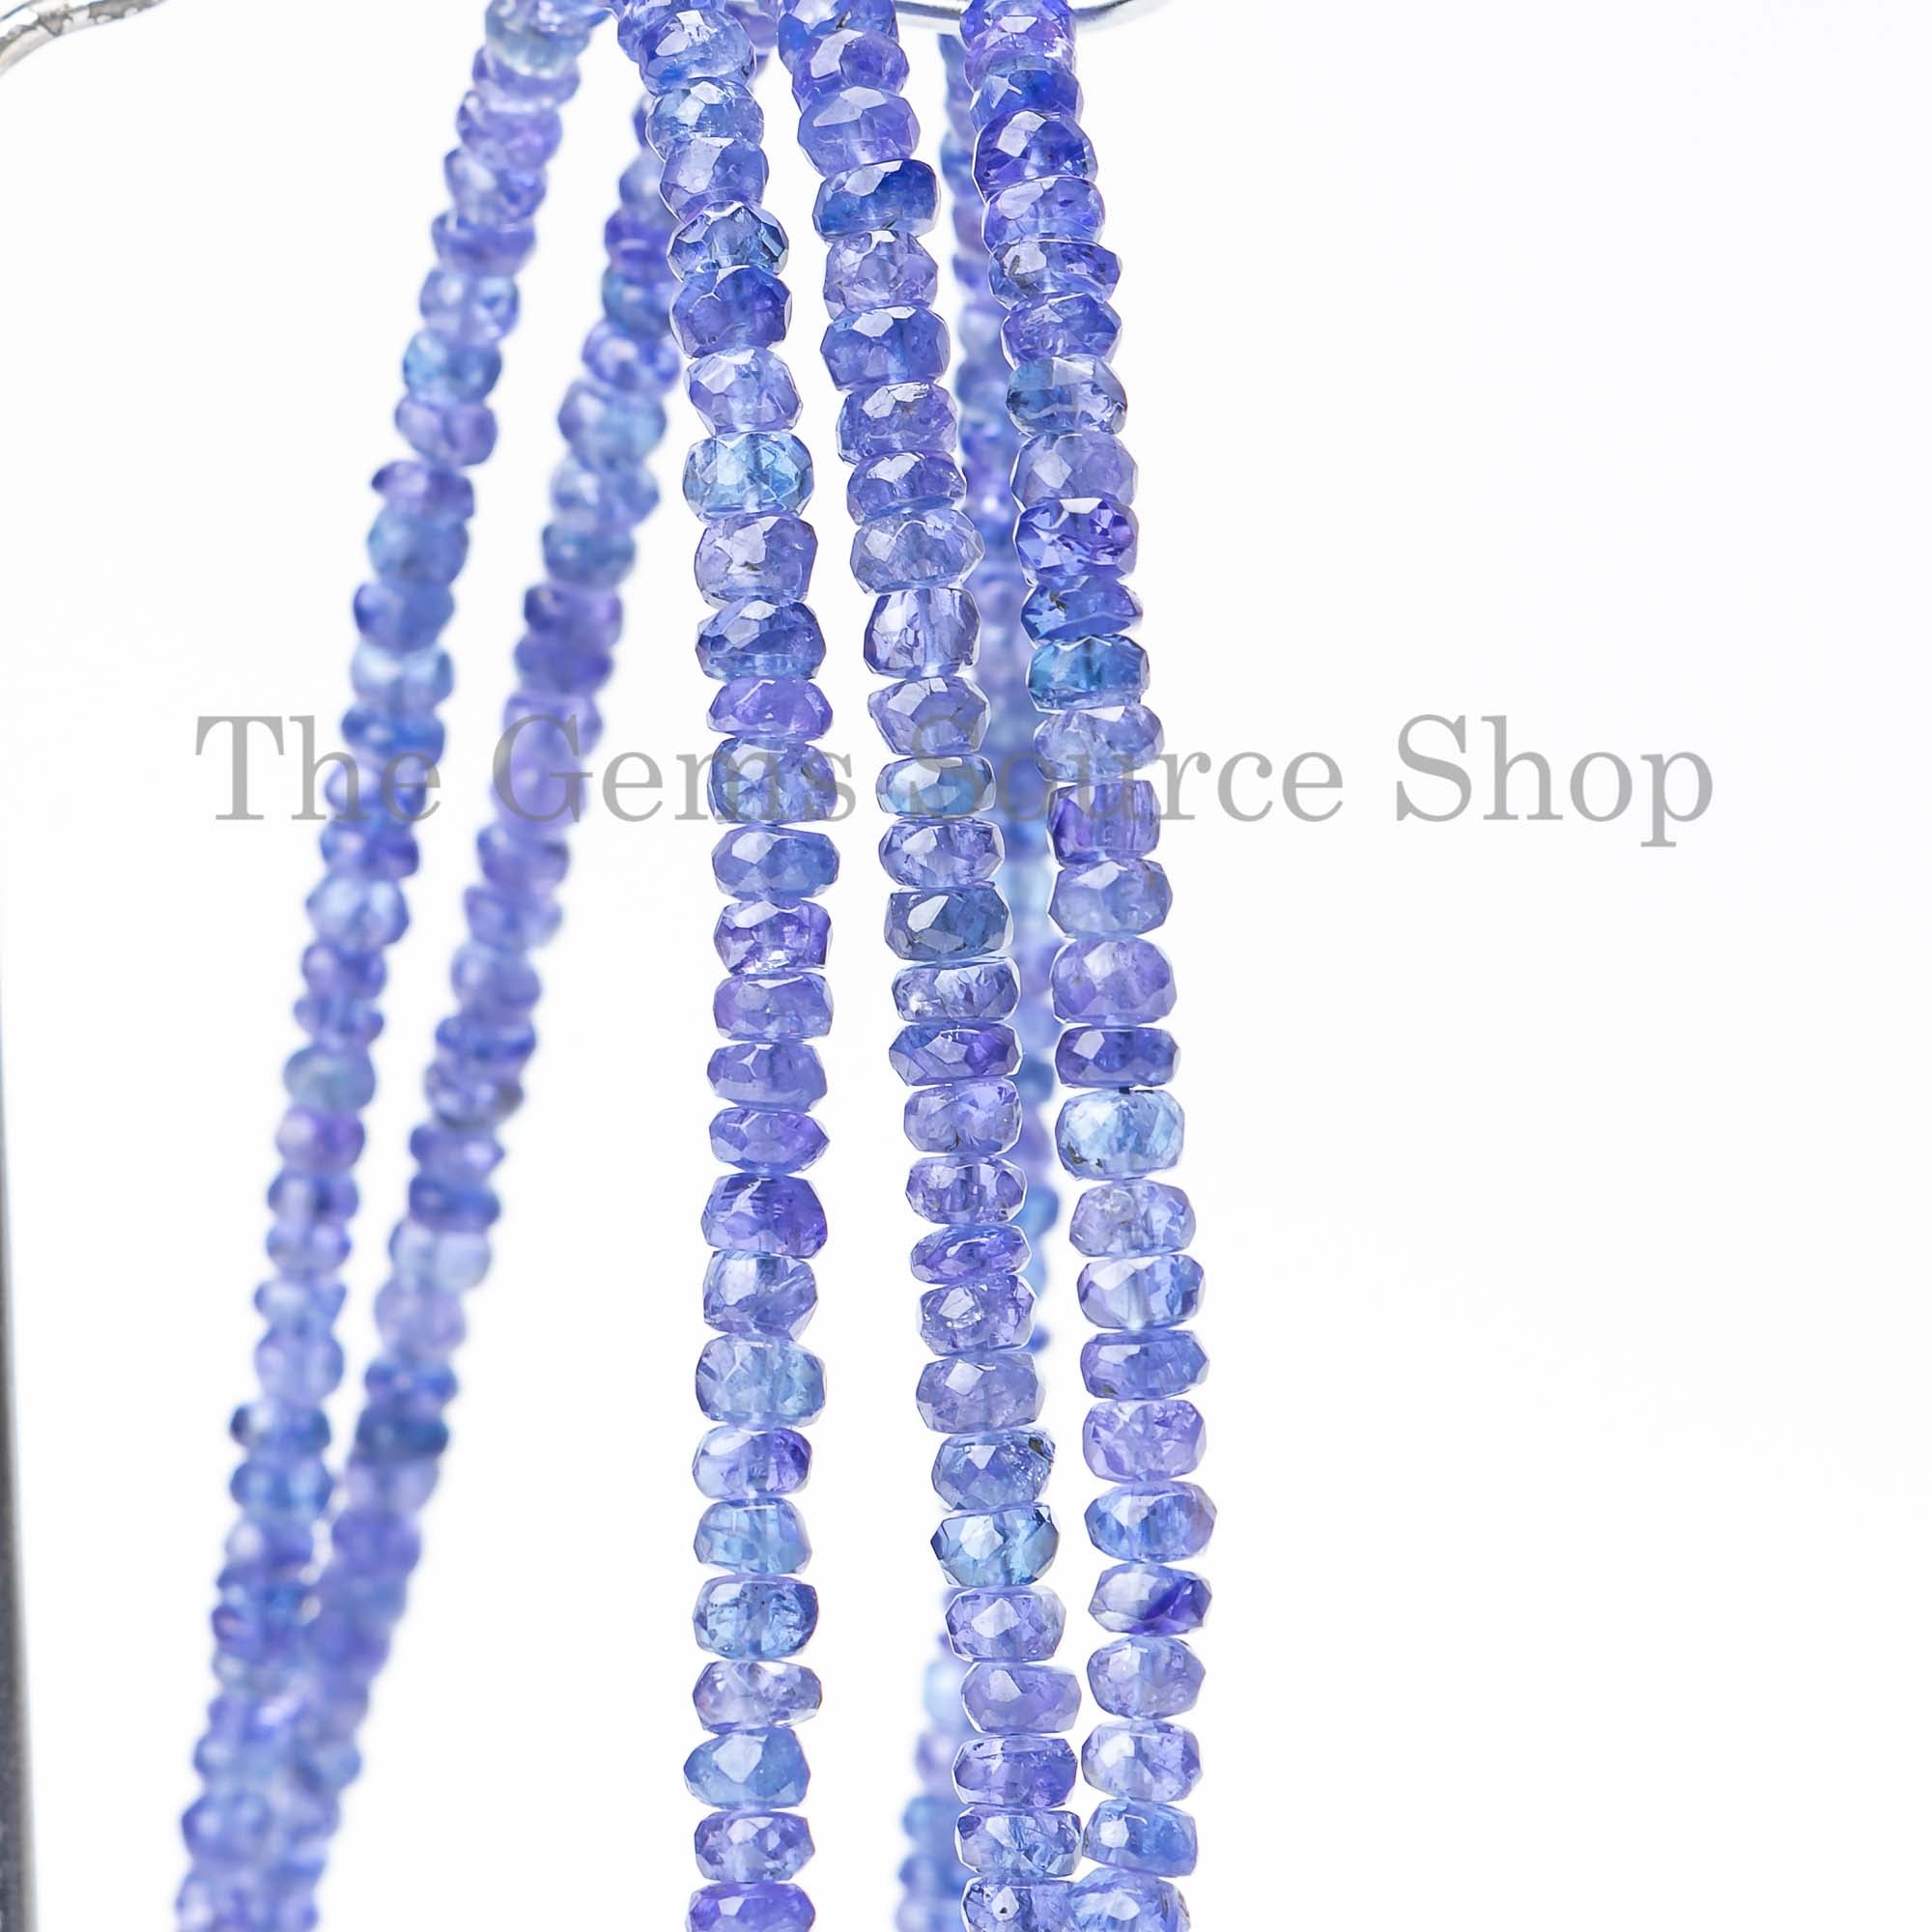 Tanzanite Beads, Tanzanite Faceted Rondelle Beads, Tanzanite Faceted Beads, Wholesale Tanzanite Beads